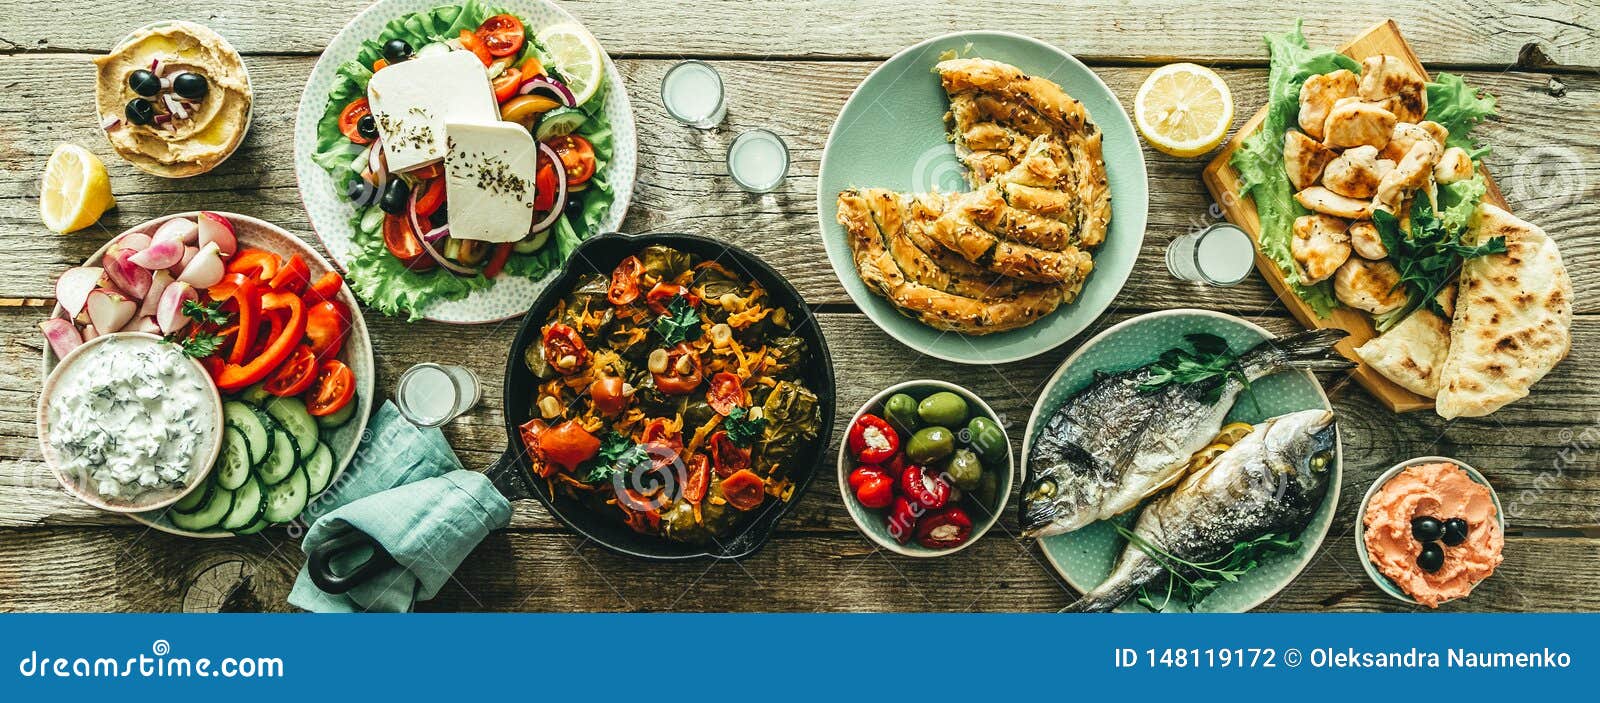 selection of traditional greek food - salad, meze, pie, fish, tzatziki, dolma on wood background